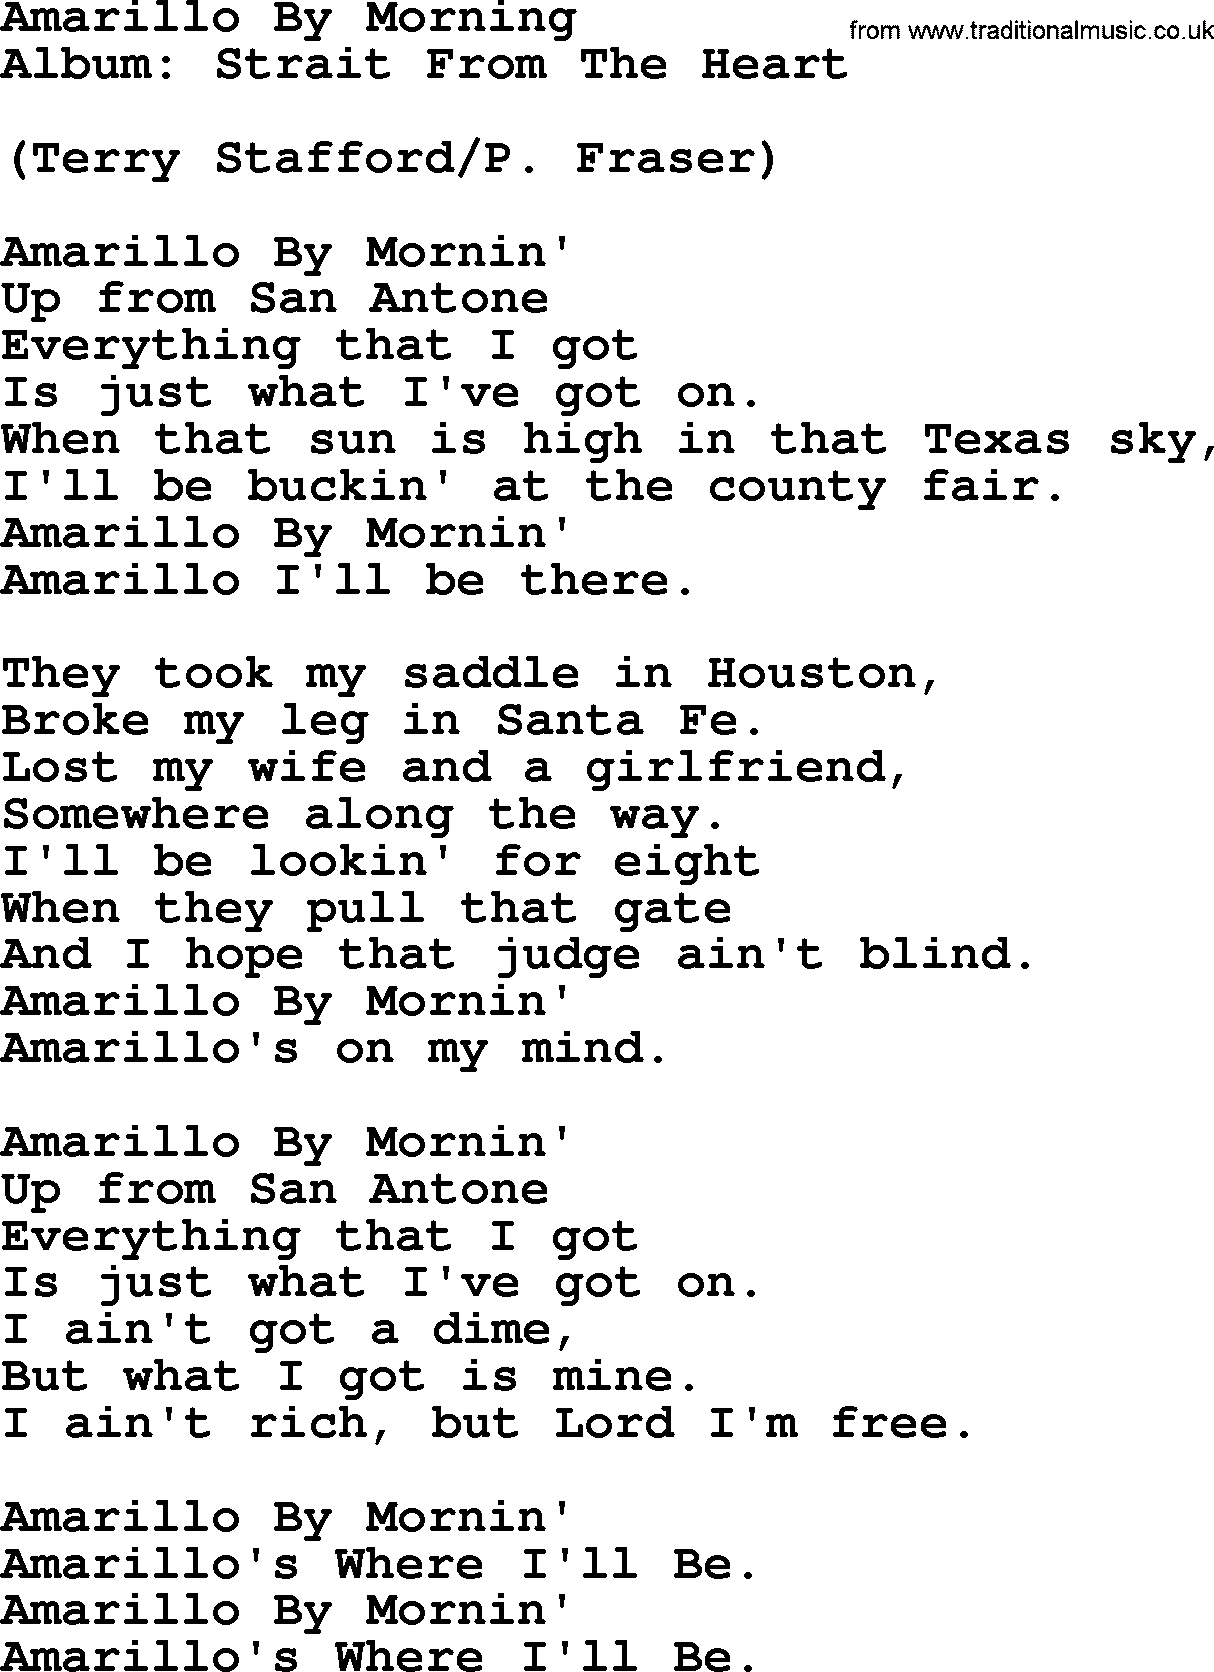 George Strait song: Amarillo By Morning, lyrics